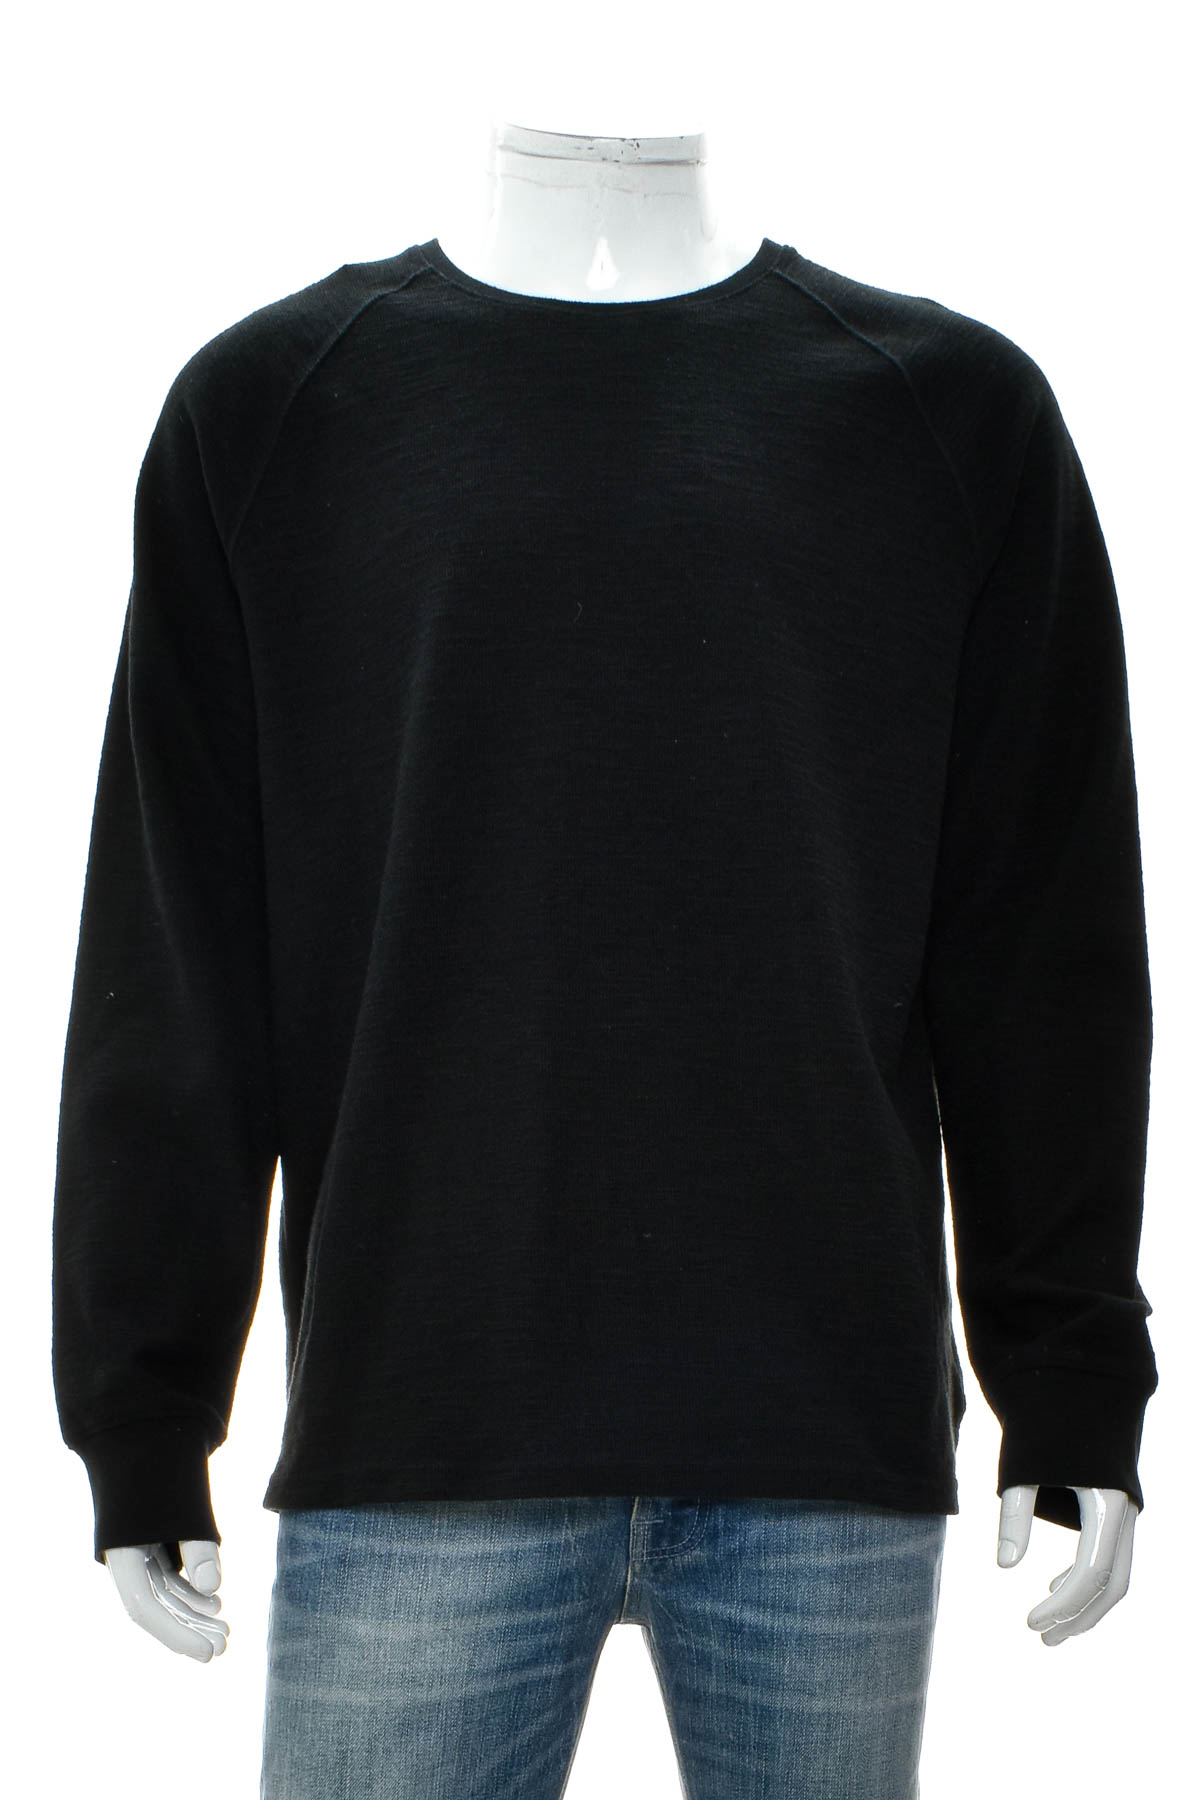 Men's sweater - Goodfellow & Co - 0